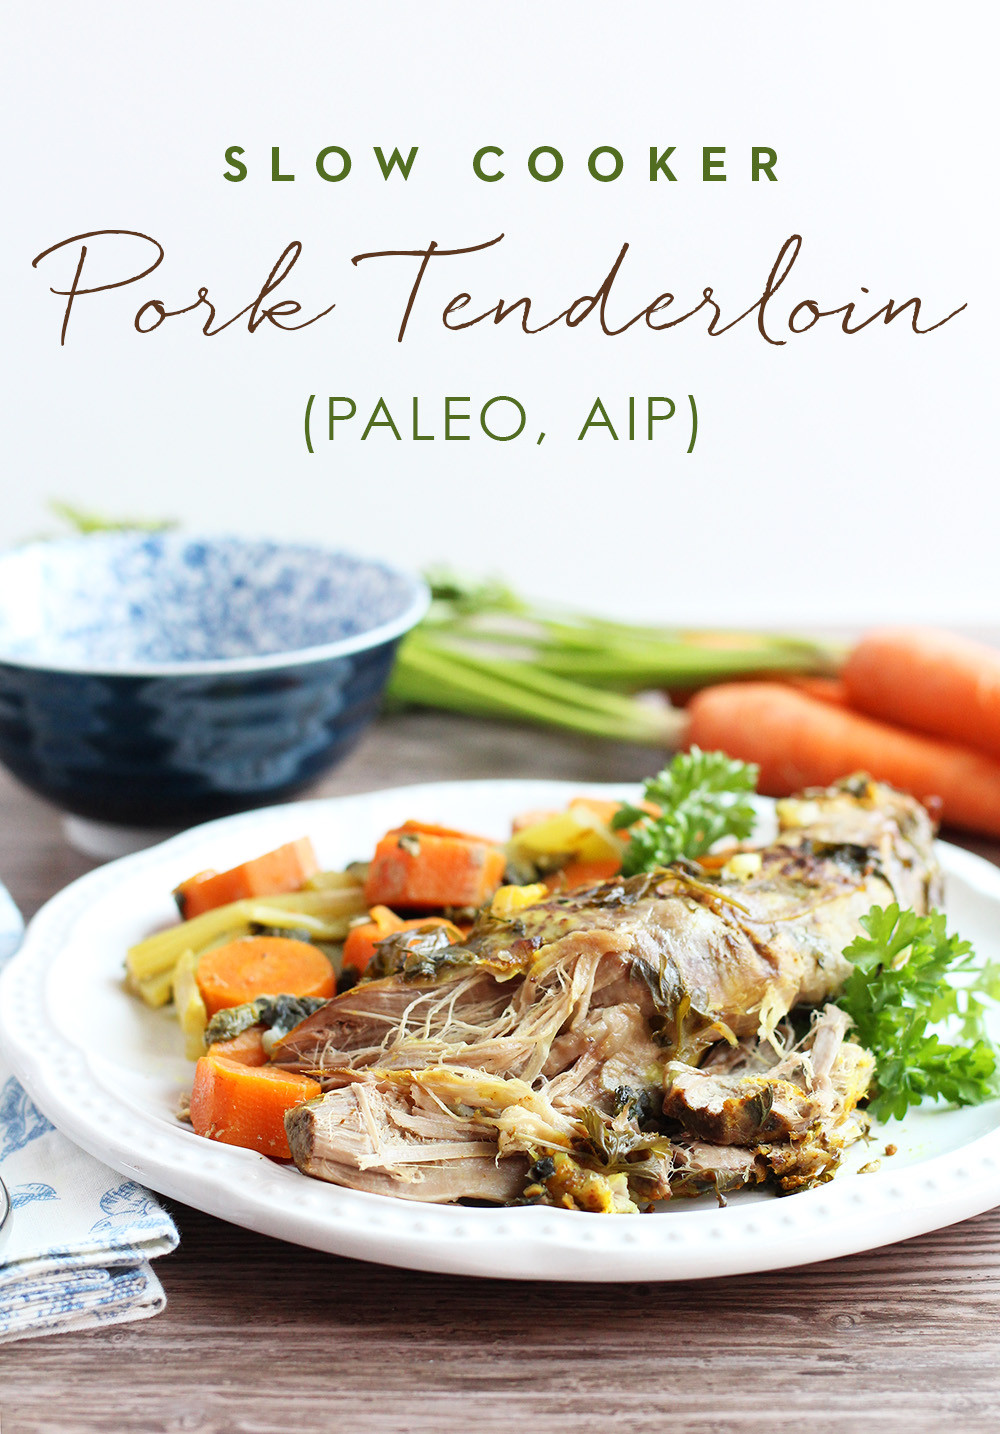 Healthy Pork Loin Slow Cooker Recipes
 Slow Cooker Pork Tenderloin Paleo AIP Whole30